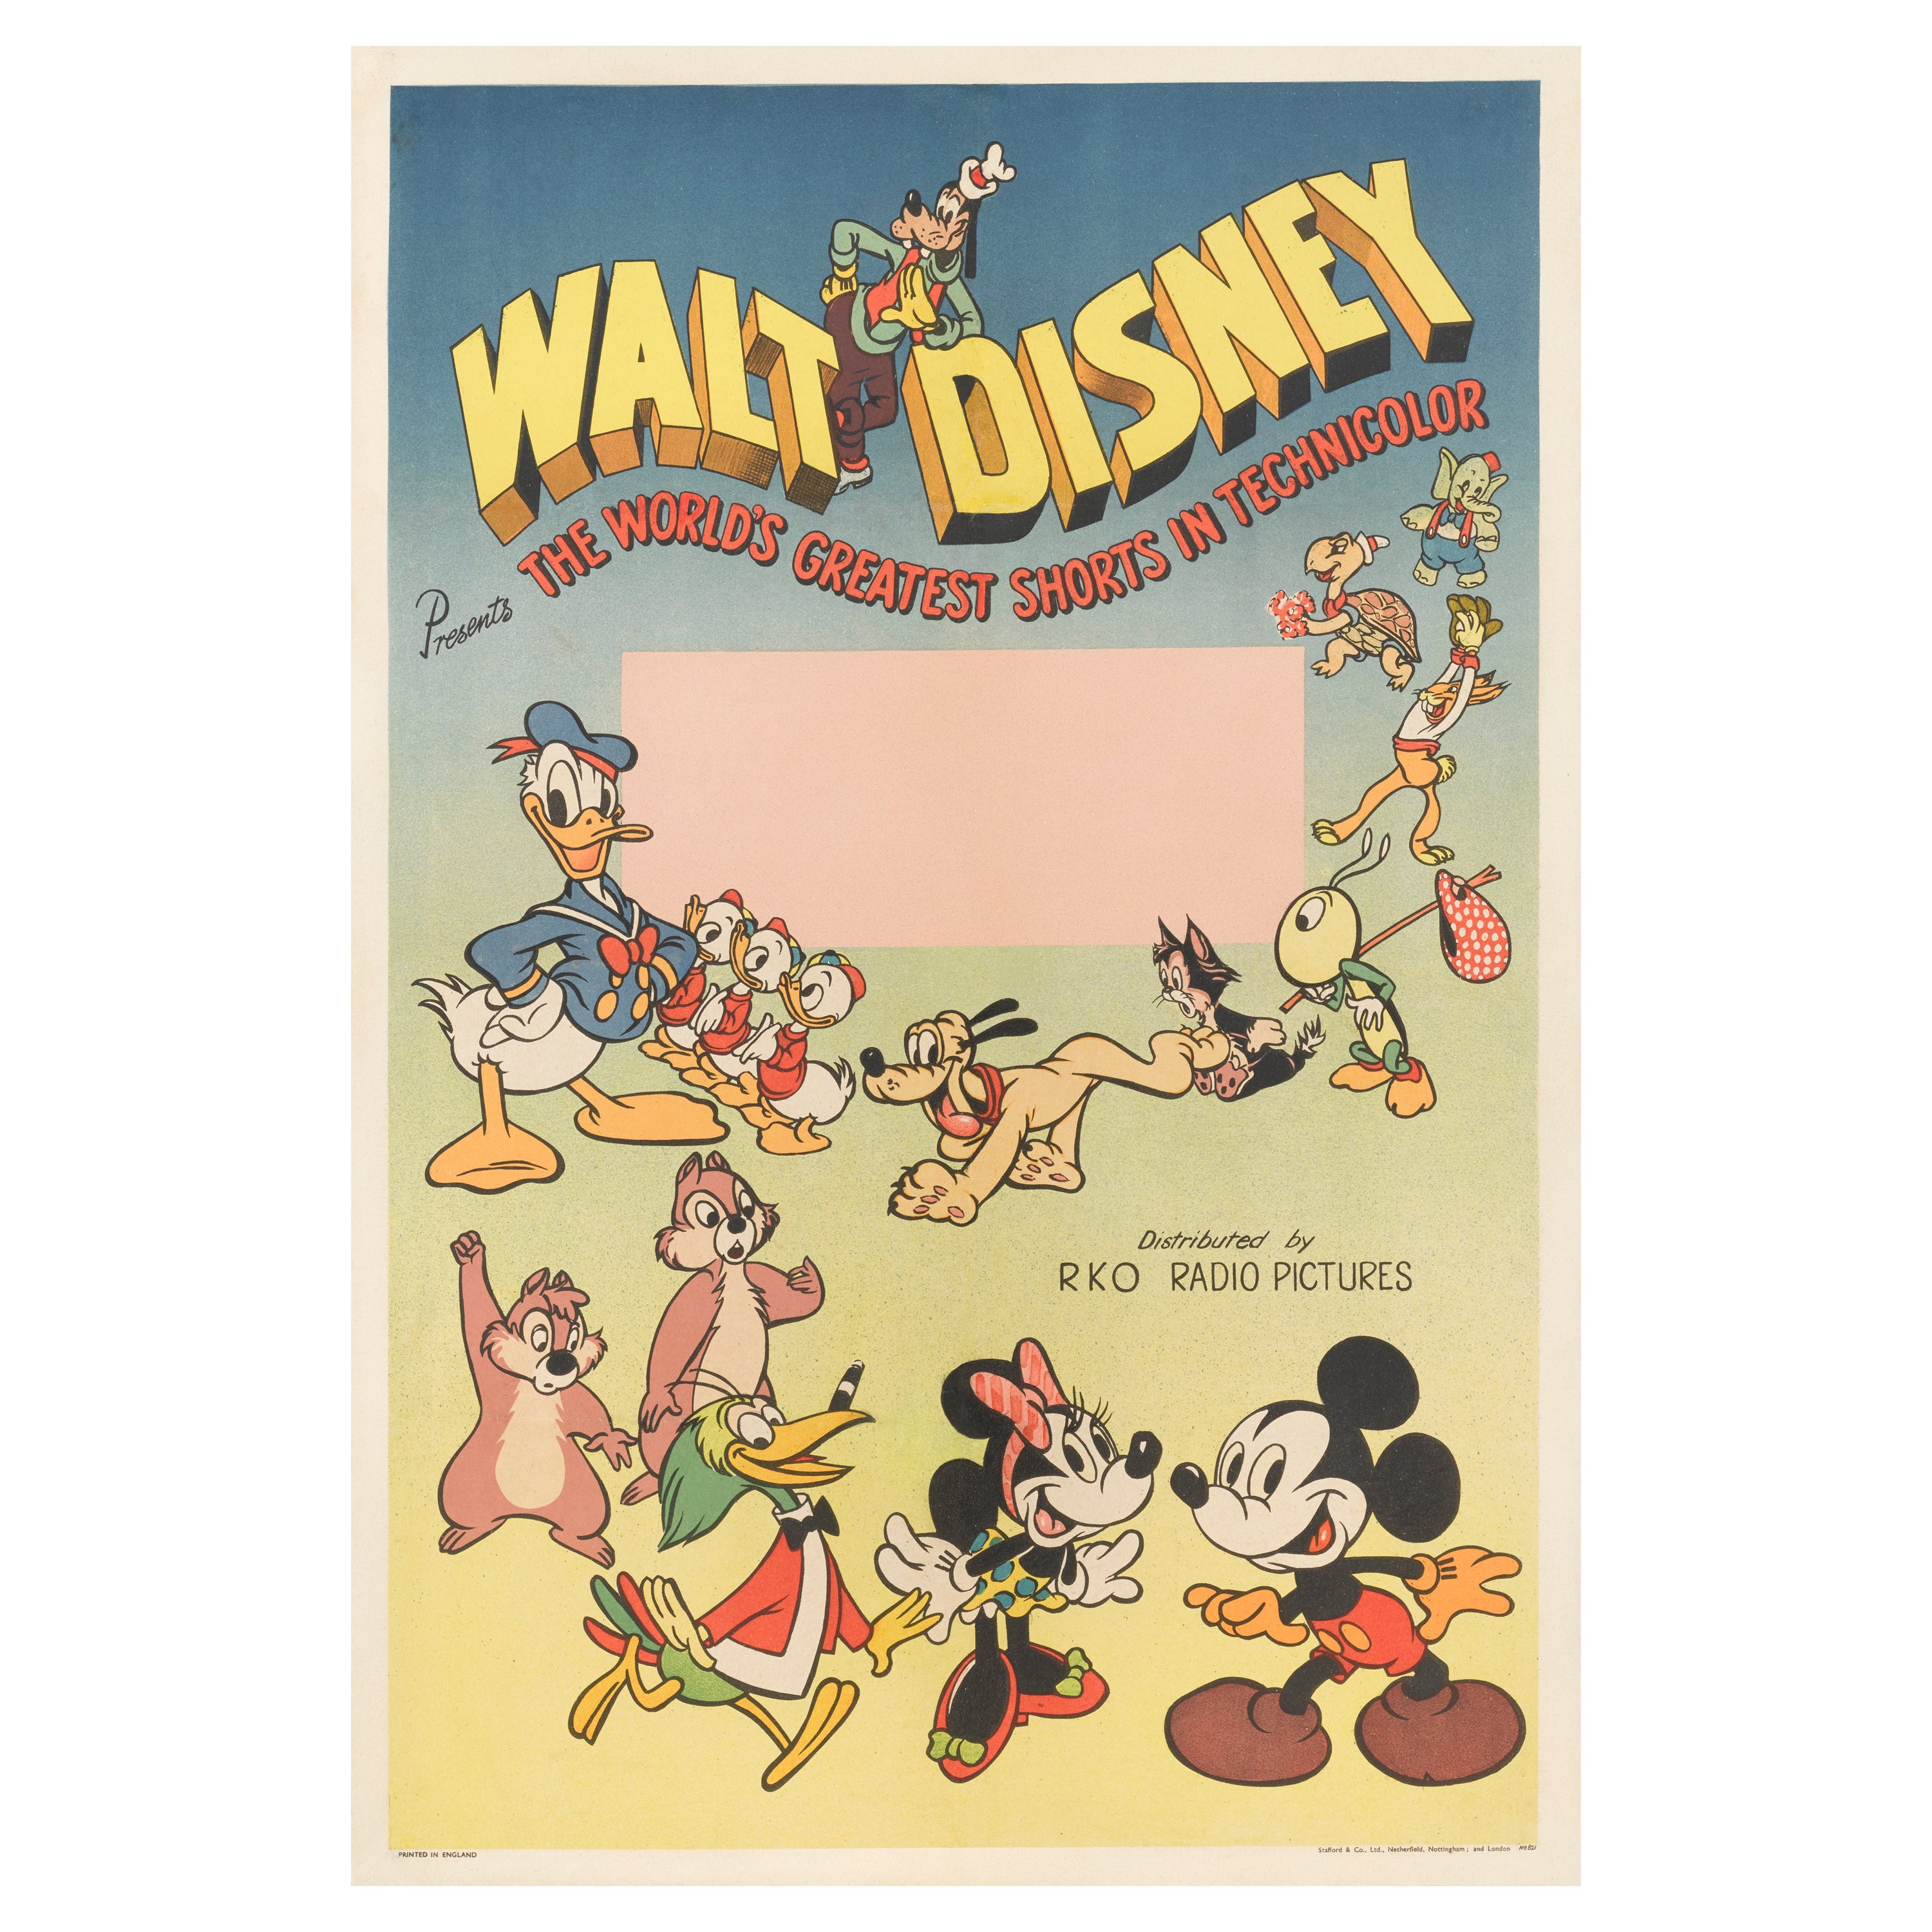 Walt Disney Presents the World's Greatest Shorts